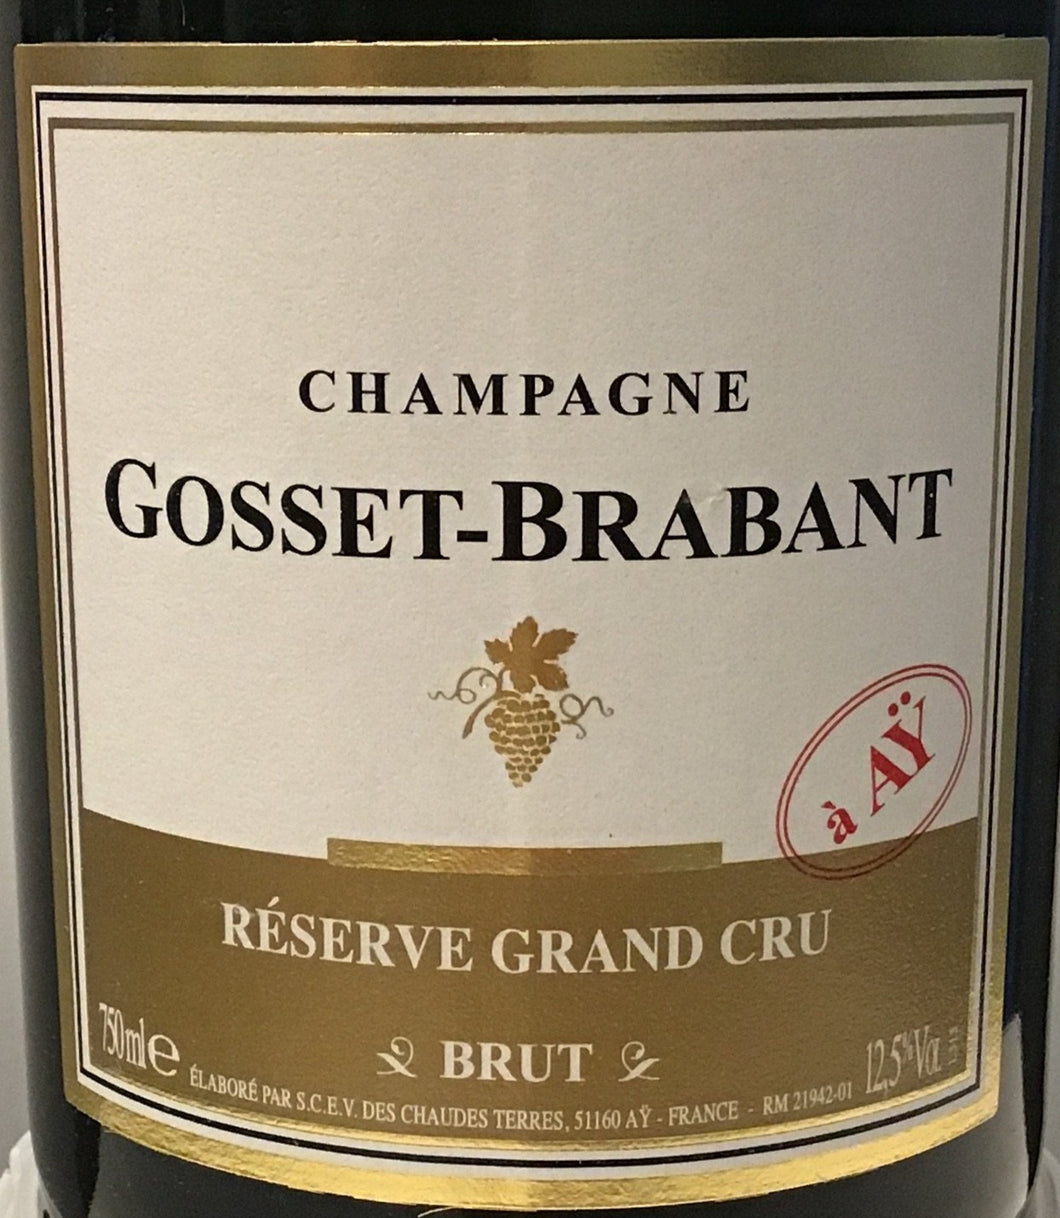 Gosset-Brabant - Reserve Grand Cru - MAGNUM 1.5L